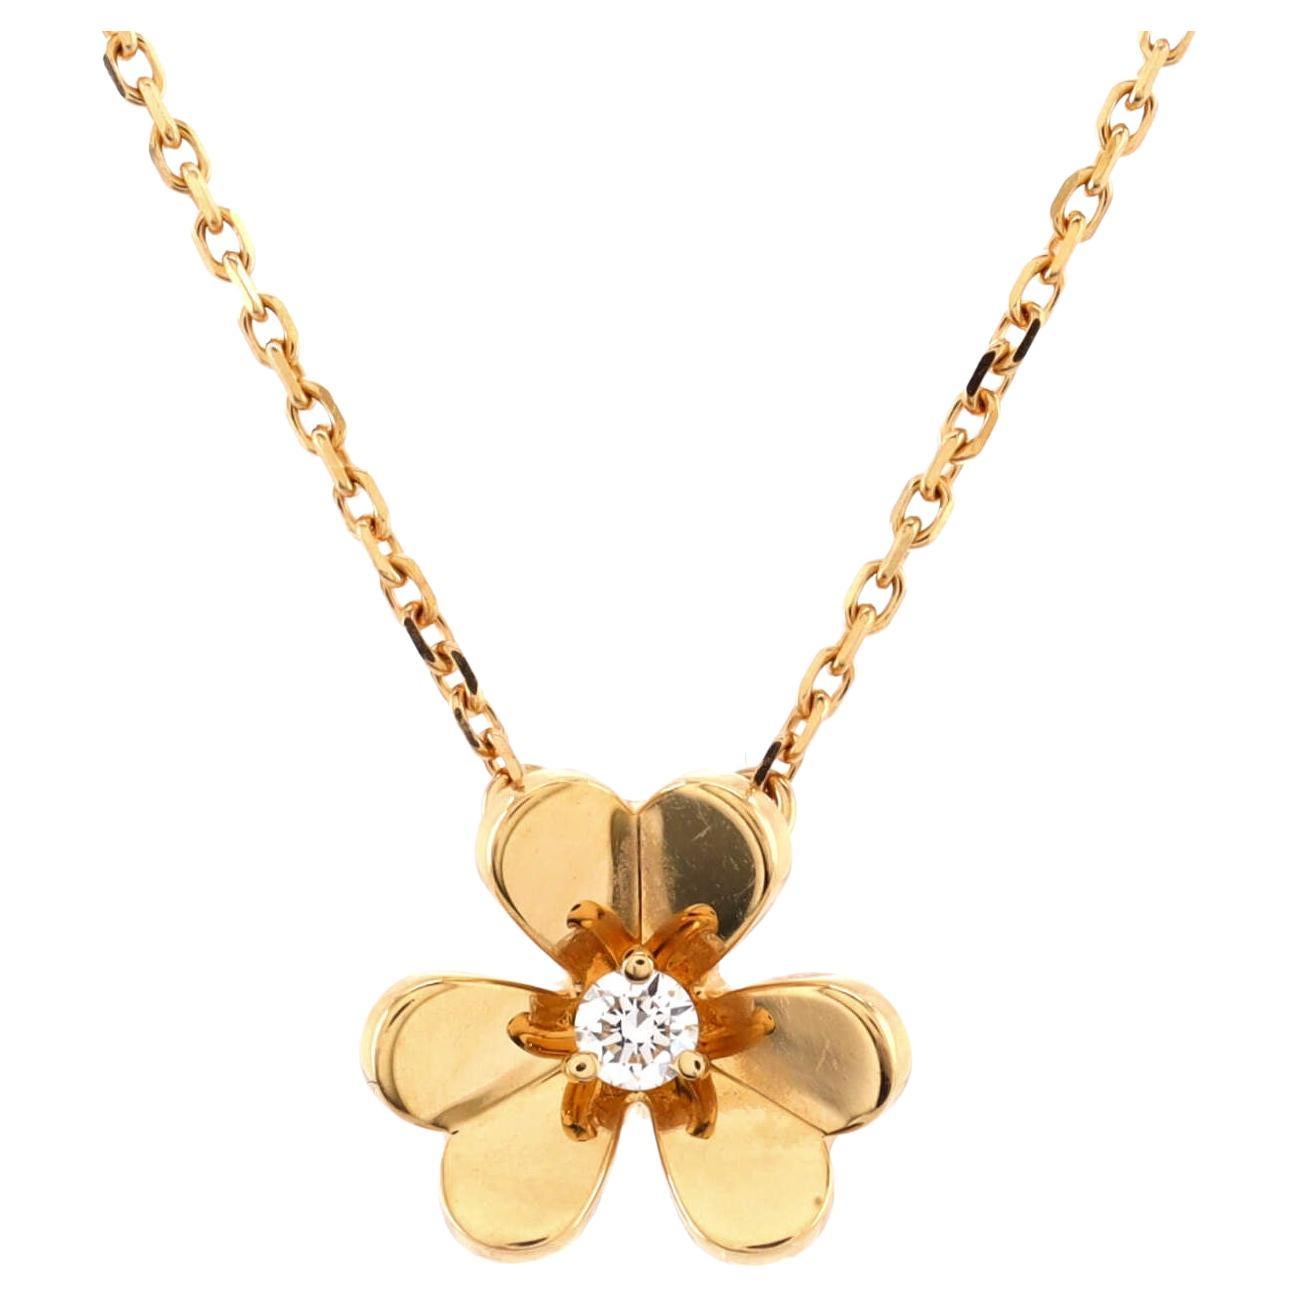 Van Cleef & Arpels Frivole Pendant Necklace 18k Yellow Gold and Diamond Mini